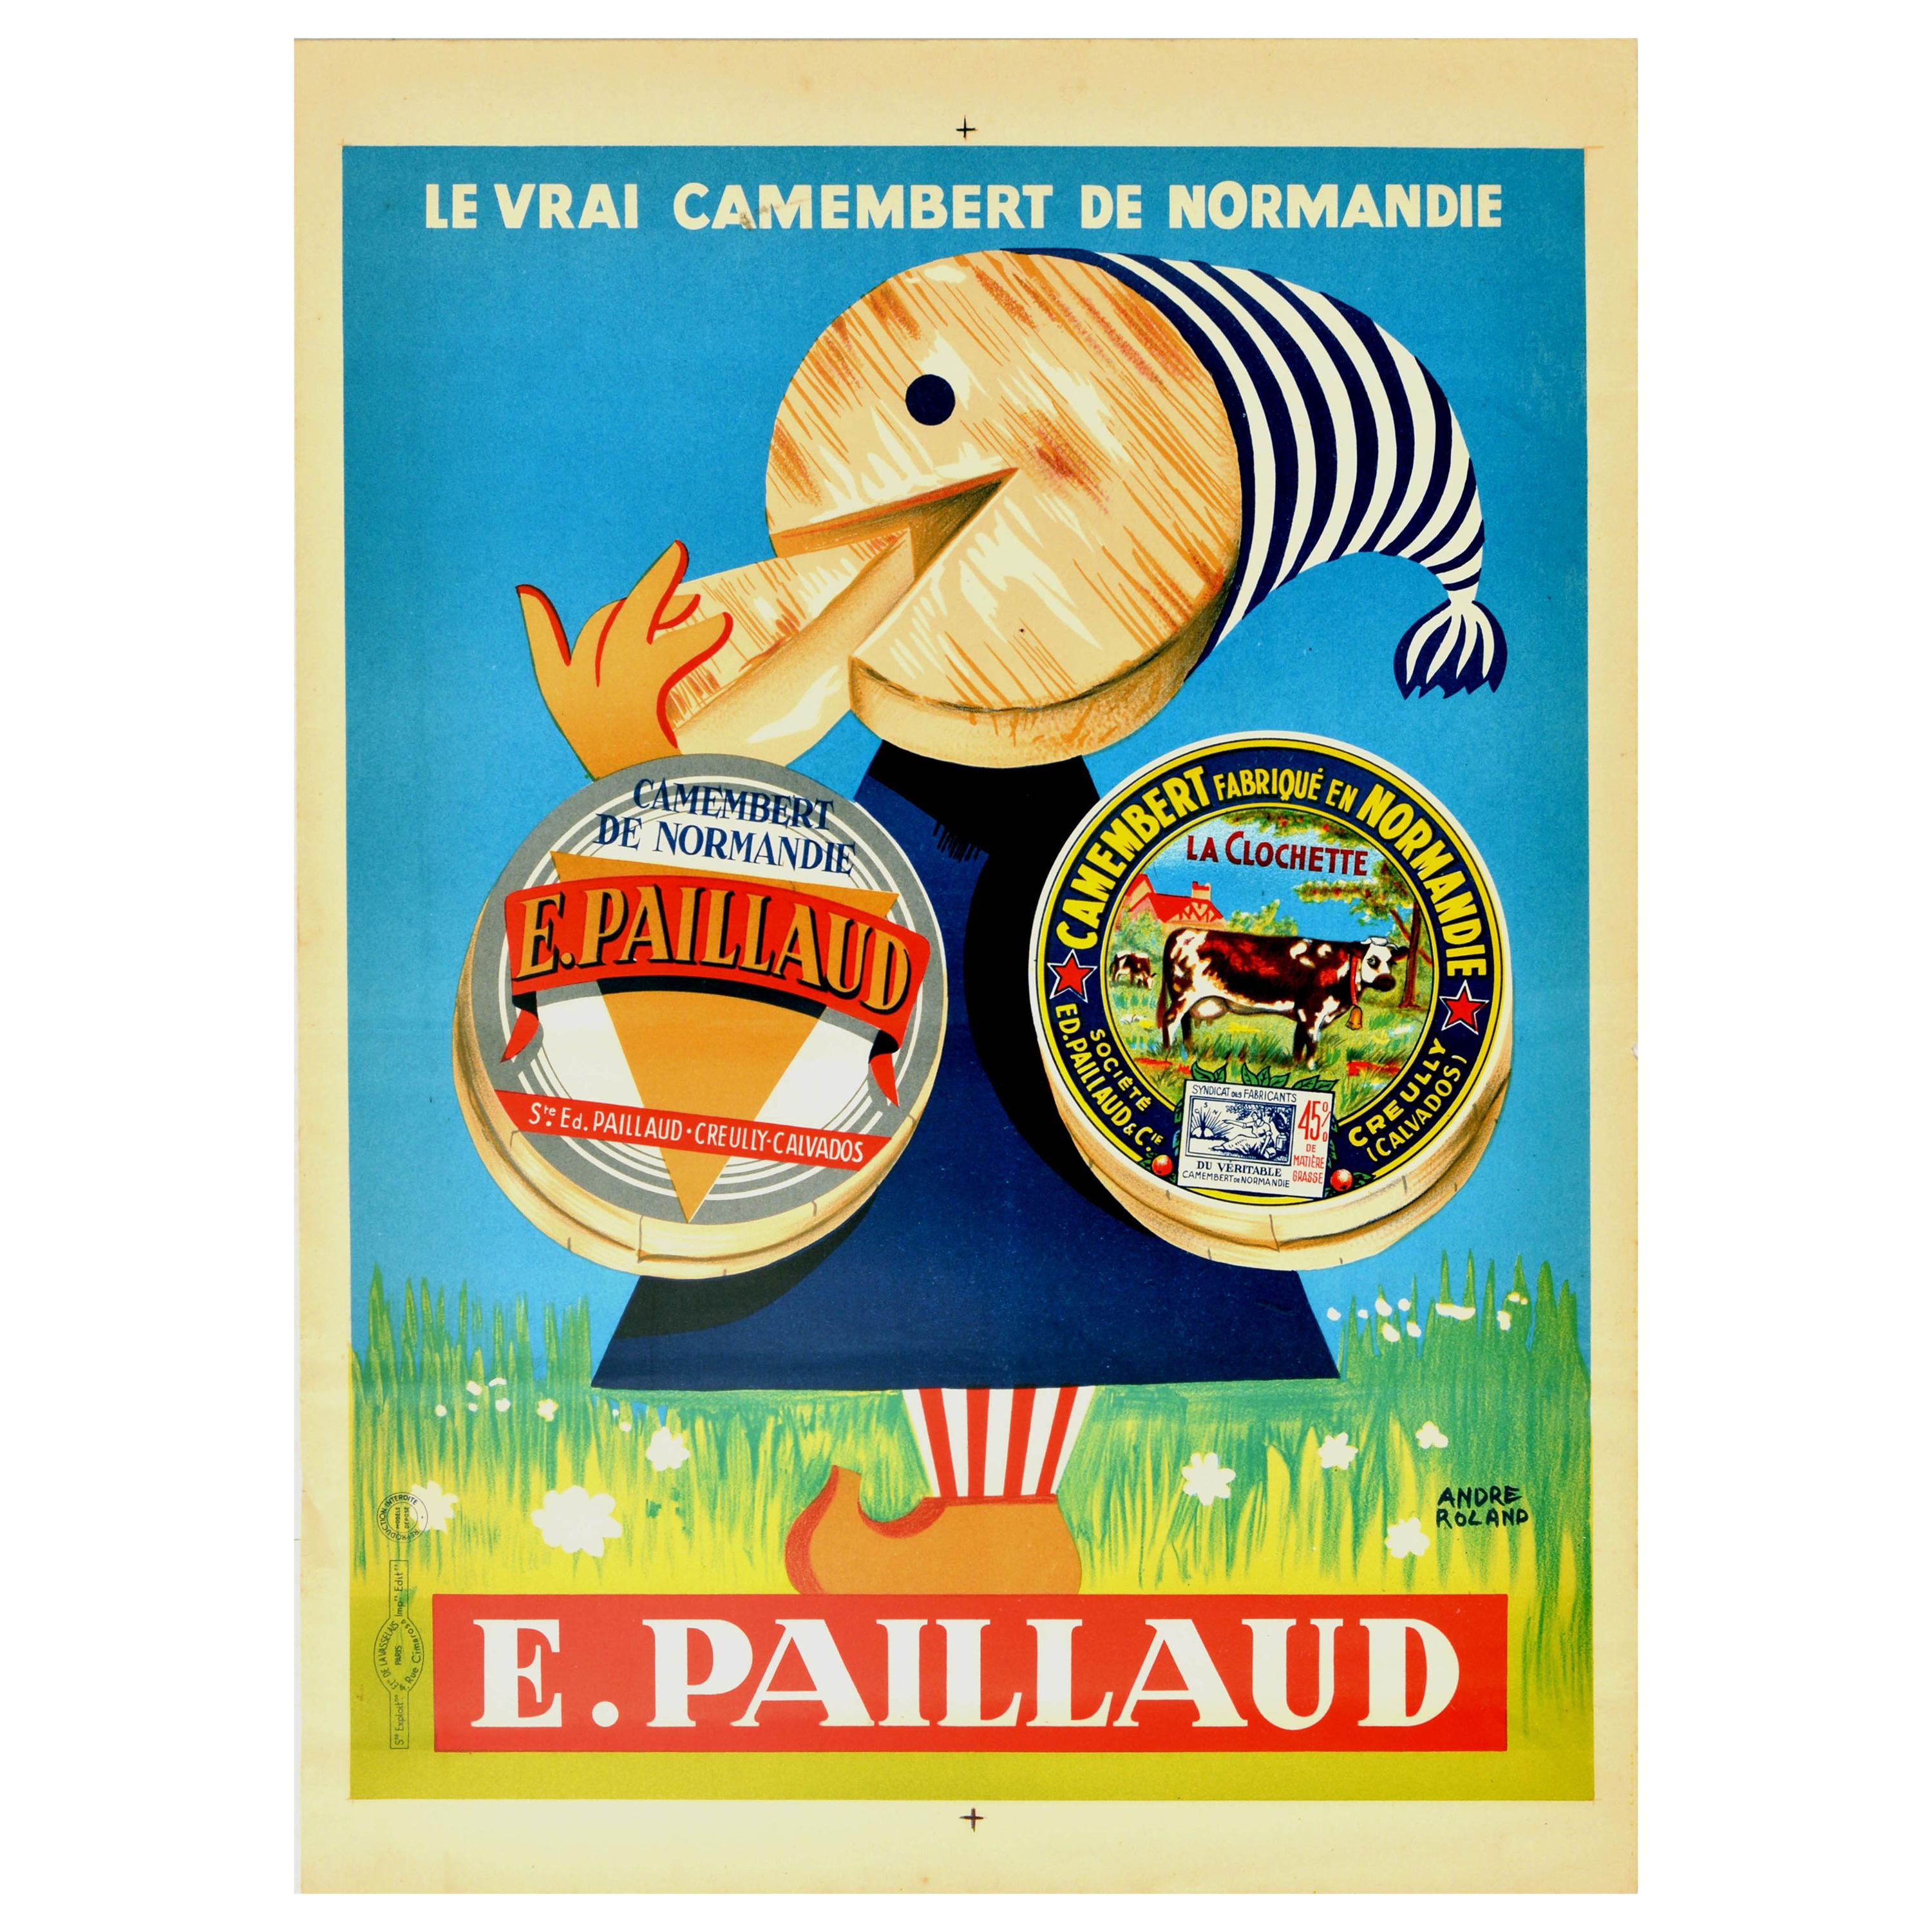 Original Vintage Poster Le Vrai Camembert De Normandie Paillaud Cheese Normandy For Sale